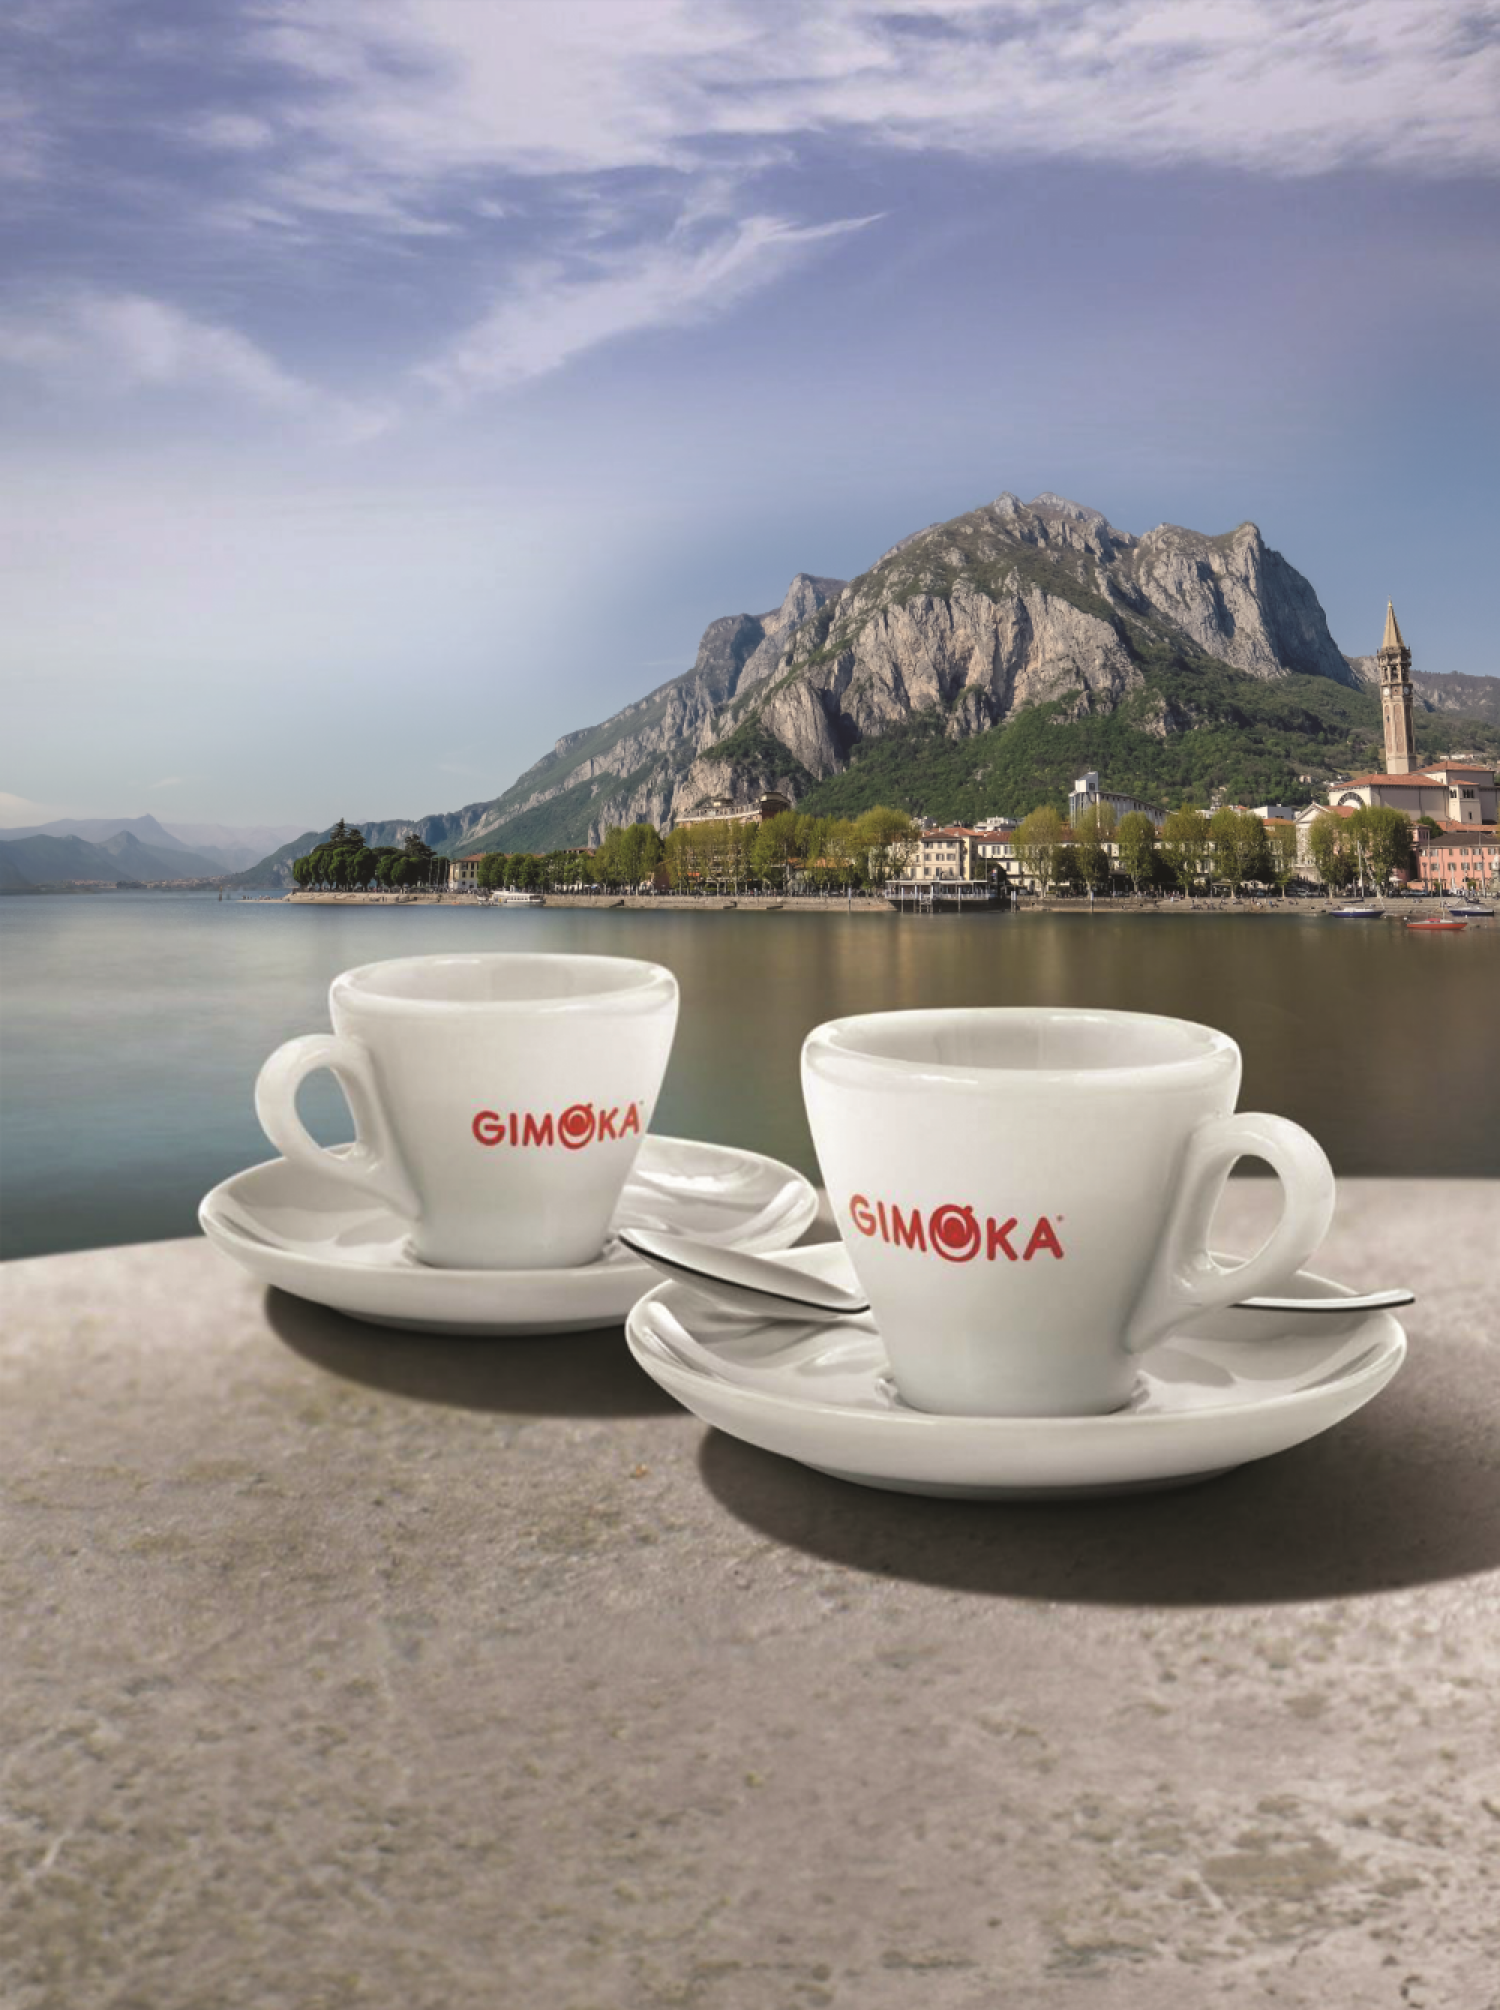 Gimoka coffee cups with a background of Lake Como